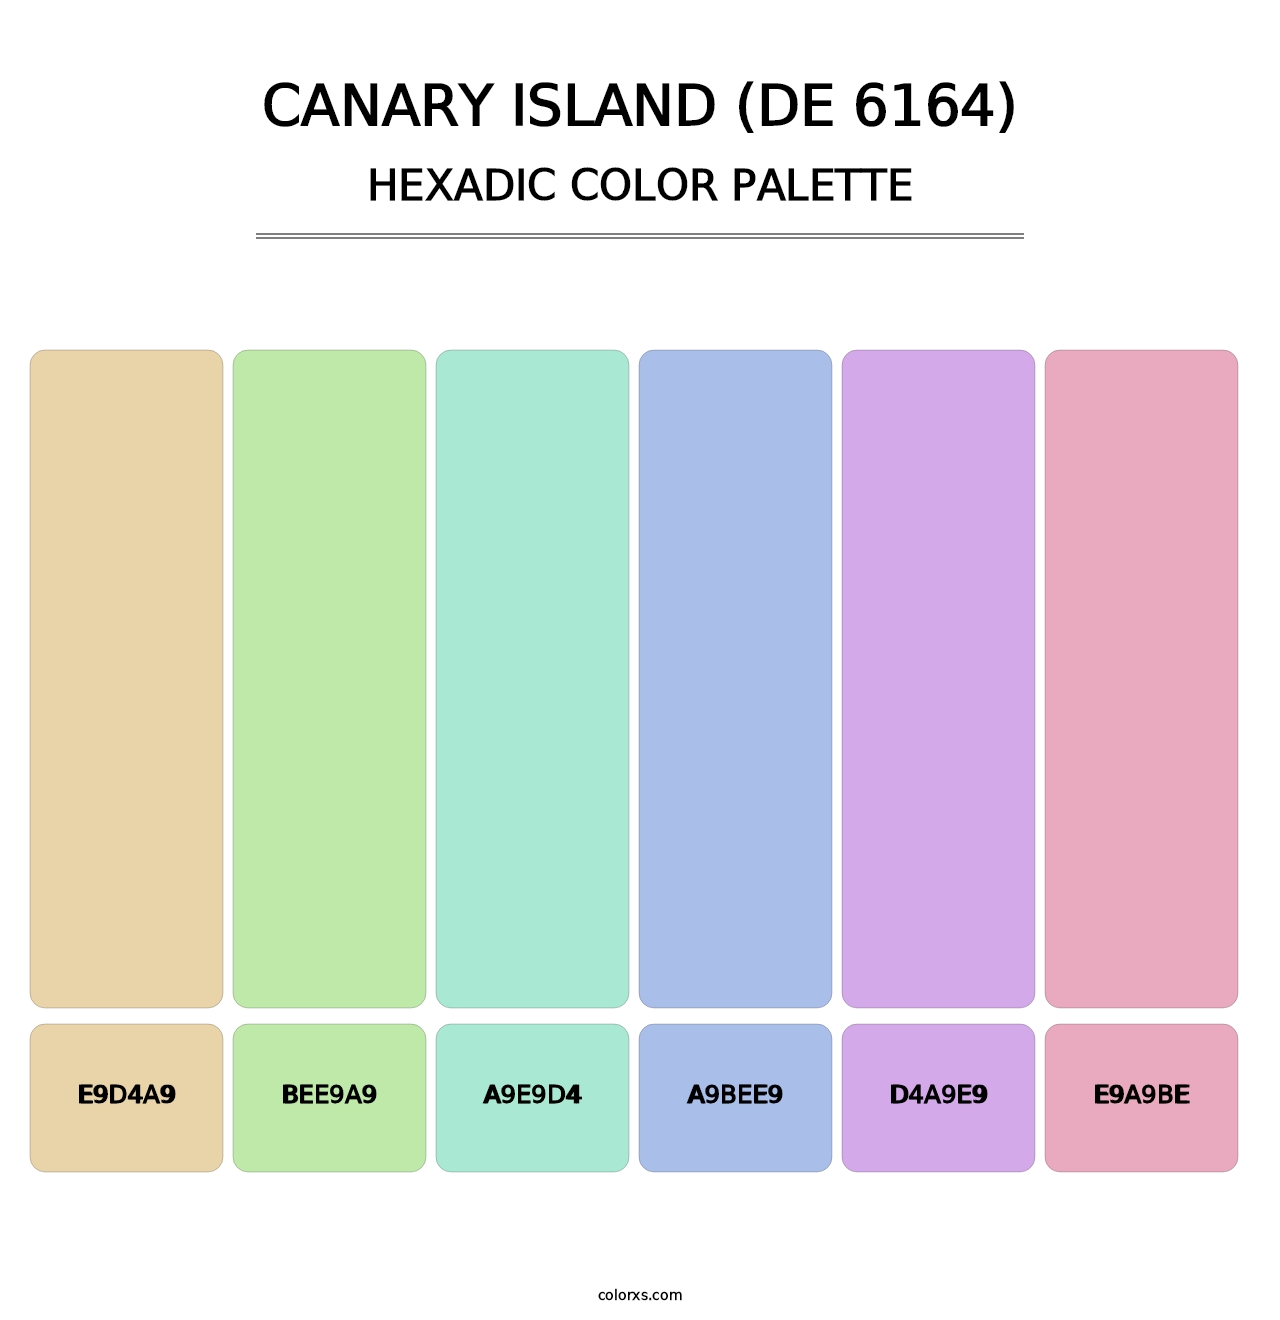 Canary Island (DE 6164) - Hexadic Color Palette